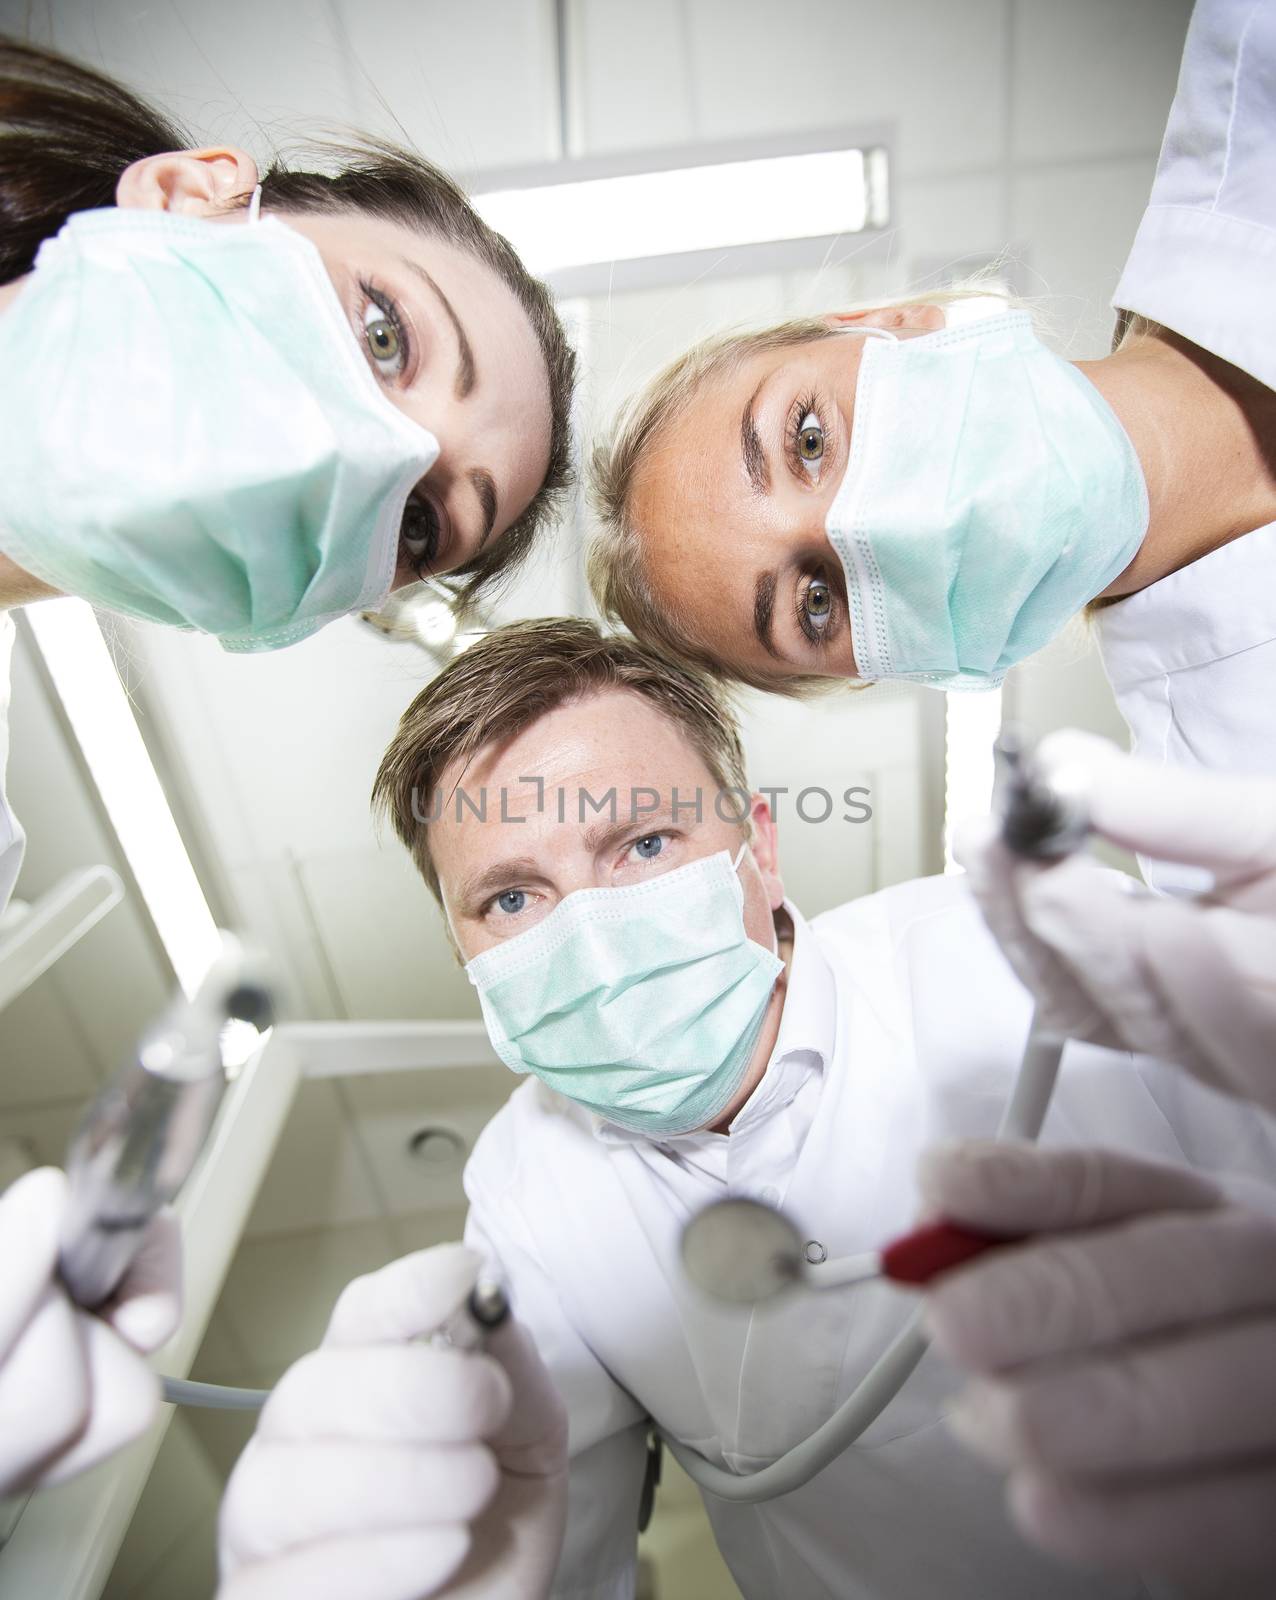 Dentist and nurses by gemenacom